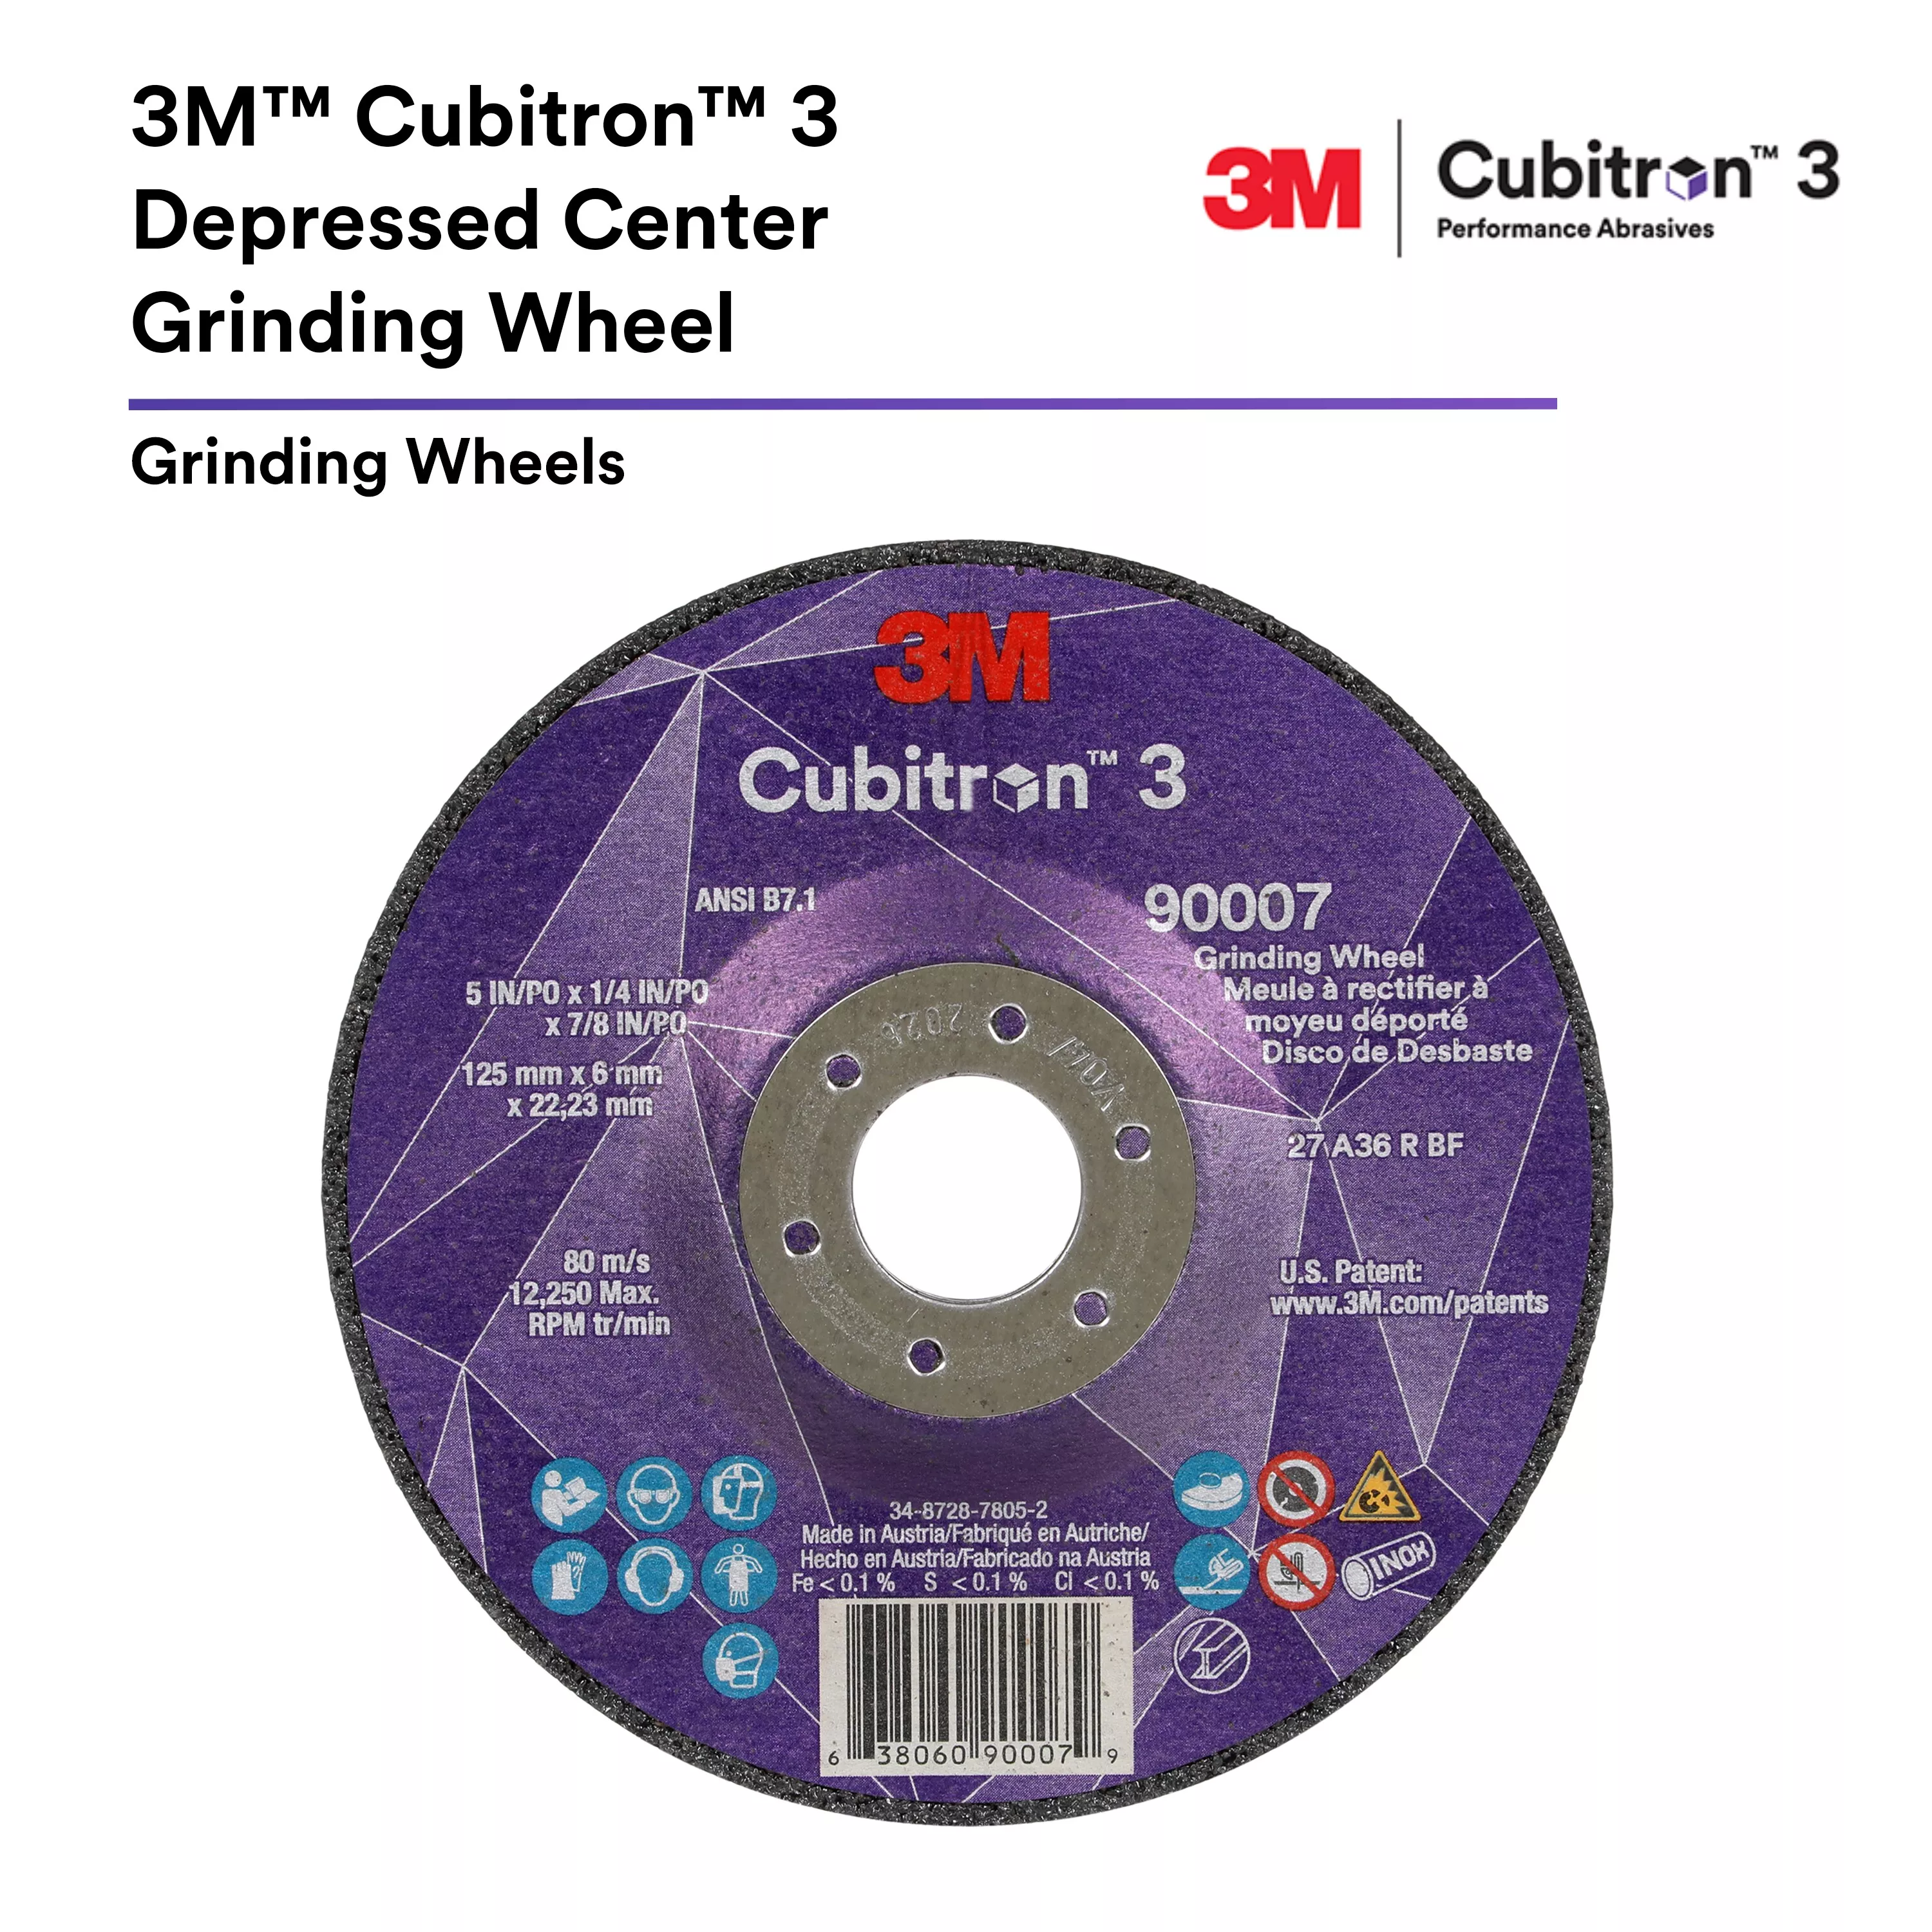 SKU 7100313193 | 3M™ Cubitron™ 3 Depressed Center Grinding Wheel